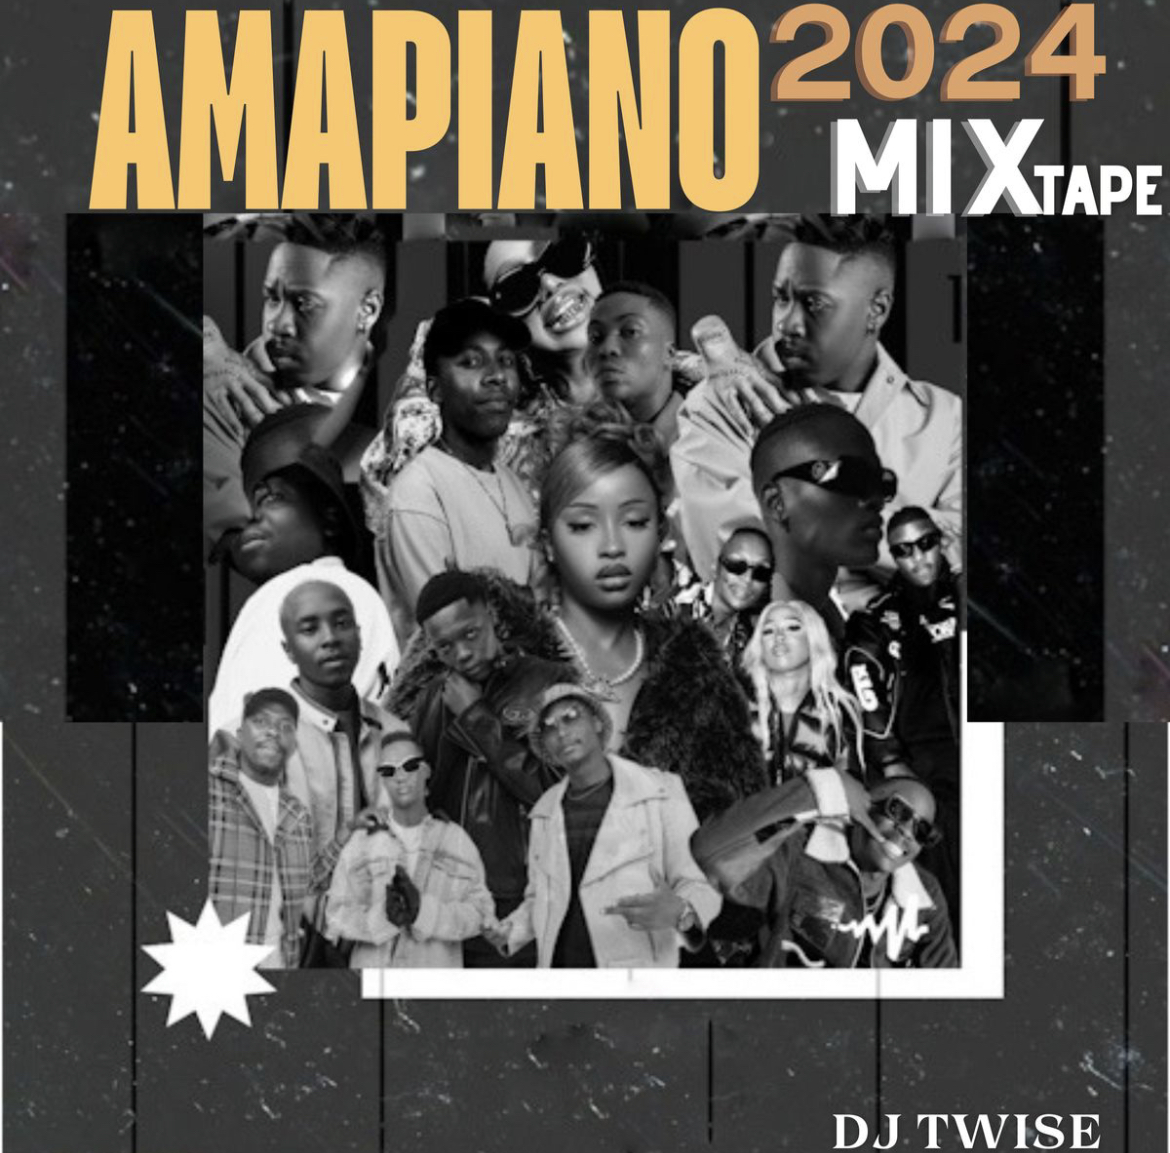 DJ Twise - Amapiano 2024 Mixtape Mp3 download